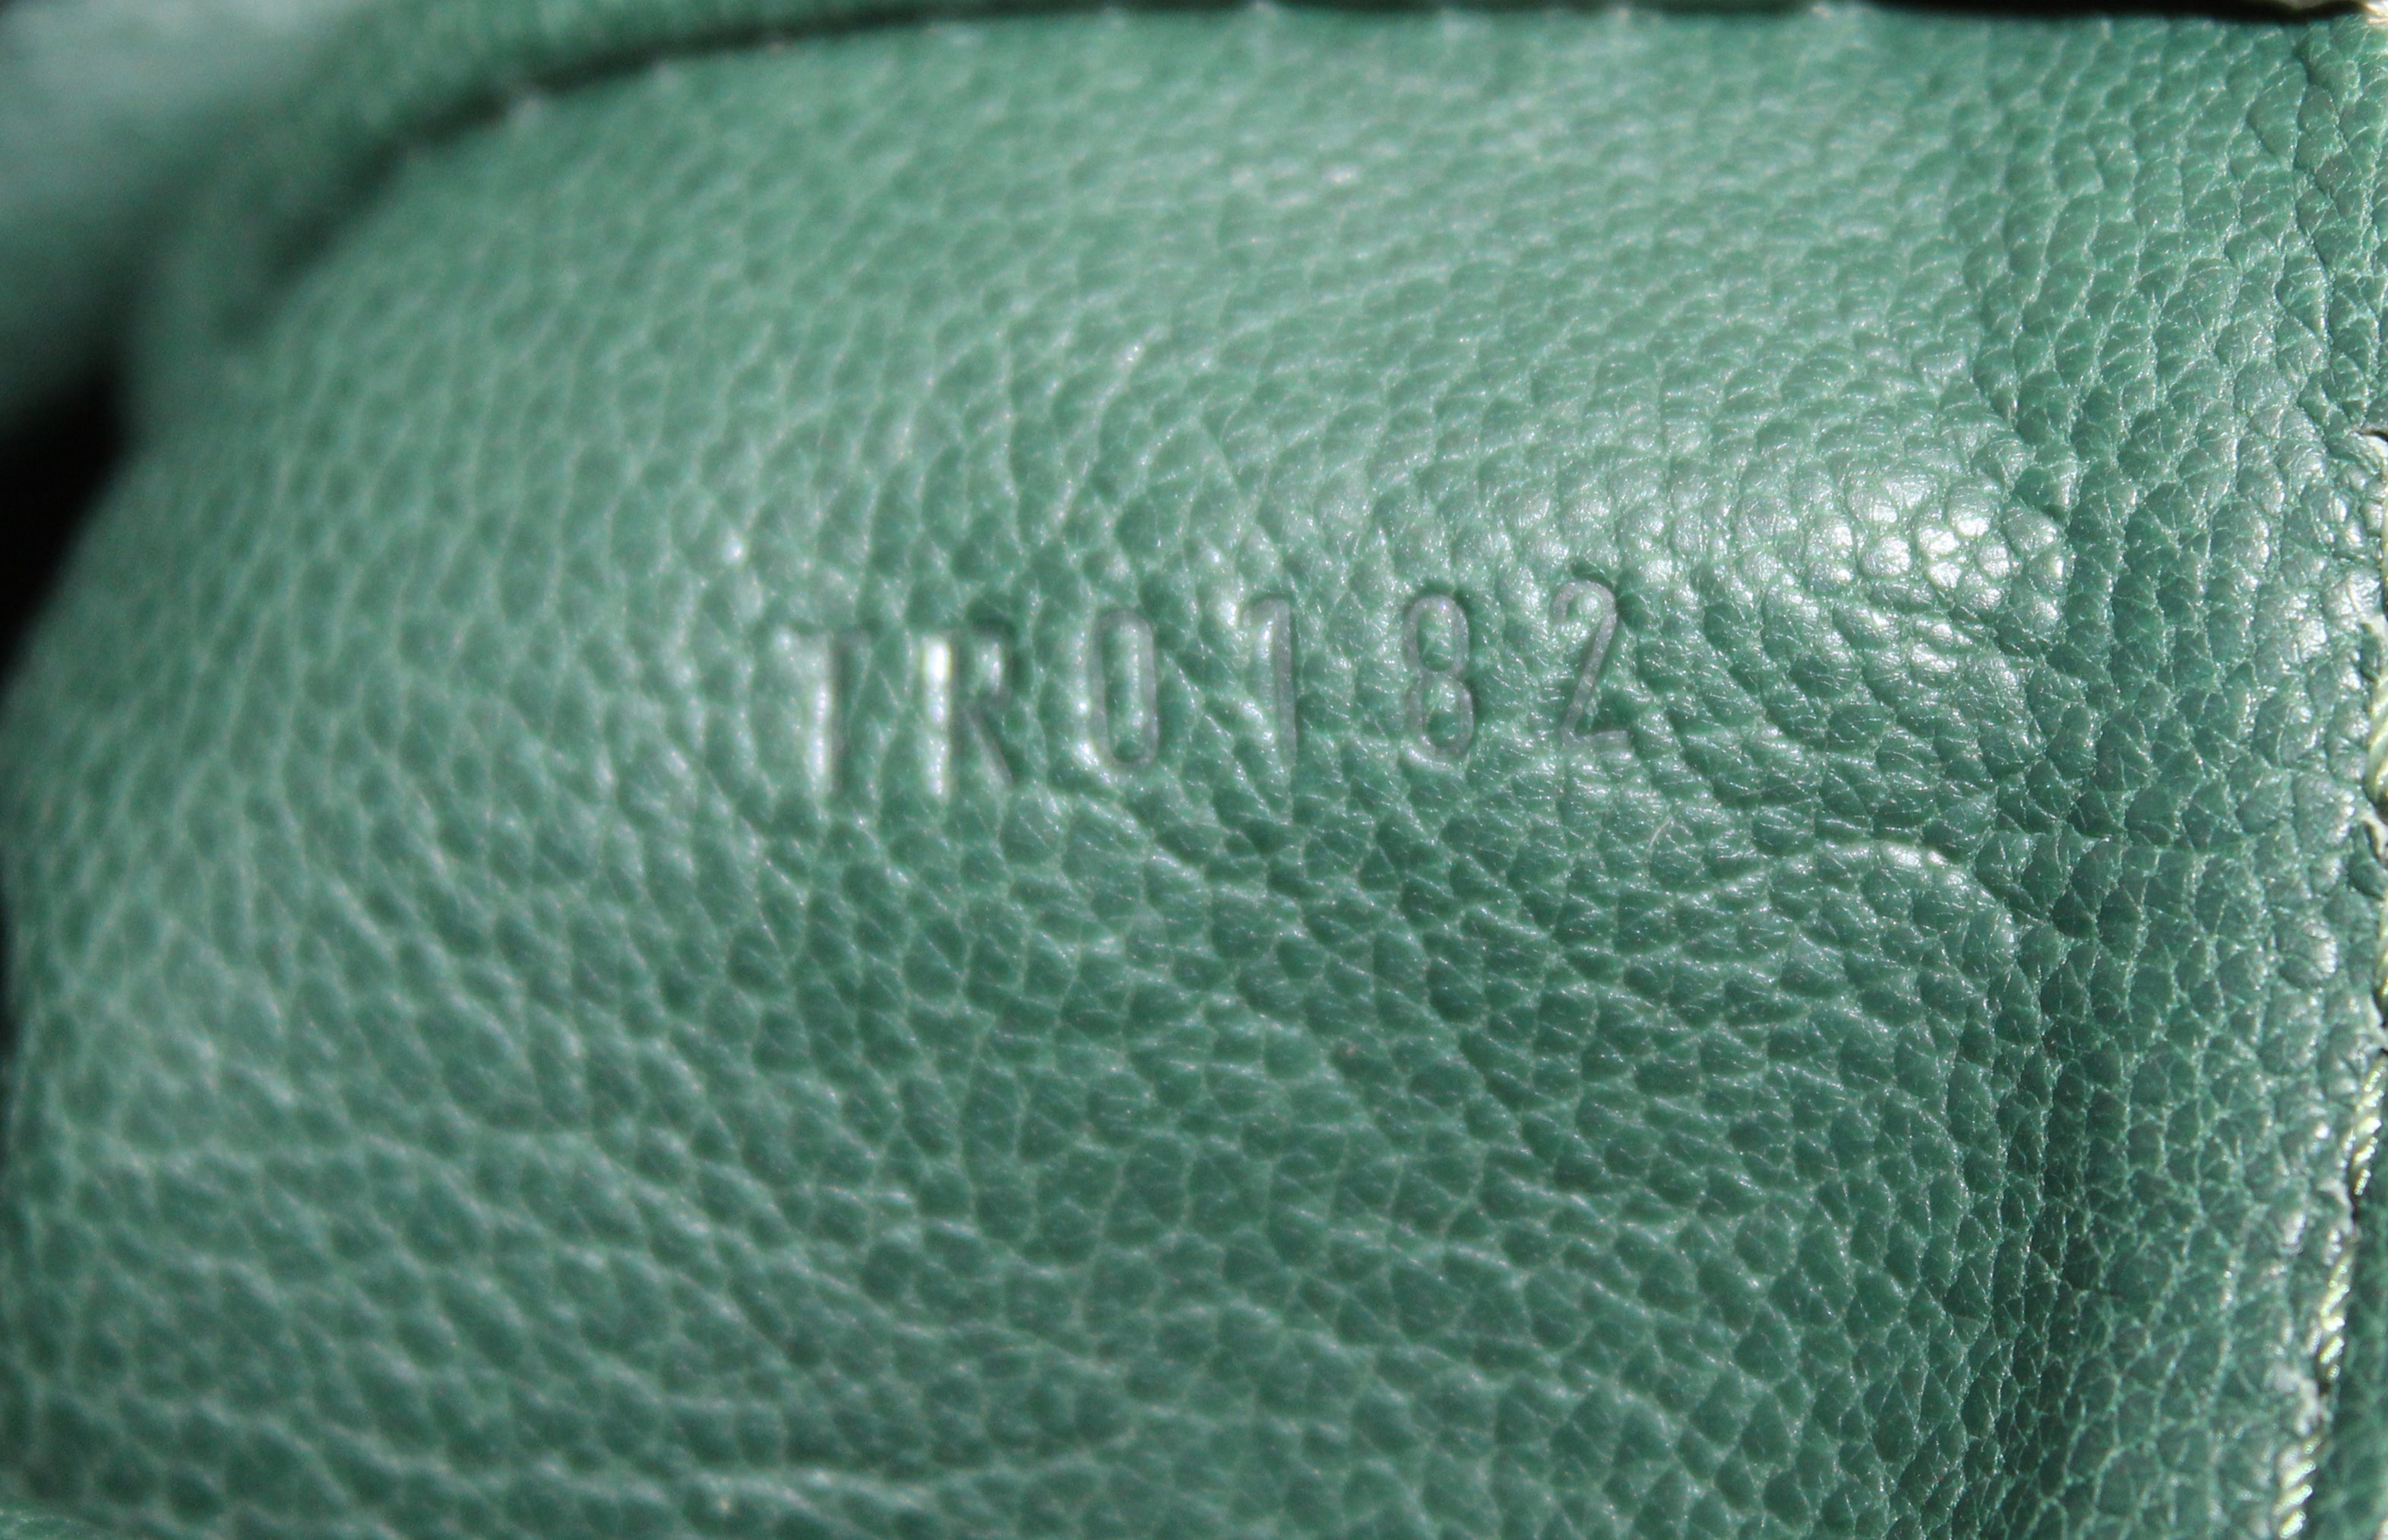 Authentic 2012 Limited Edition Louis Vuitton Green Monogram Sorbet Speedy Handbag